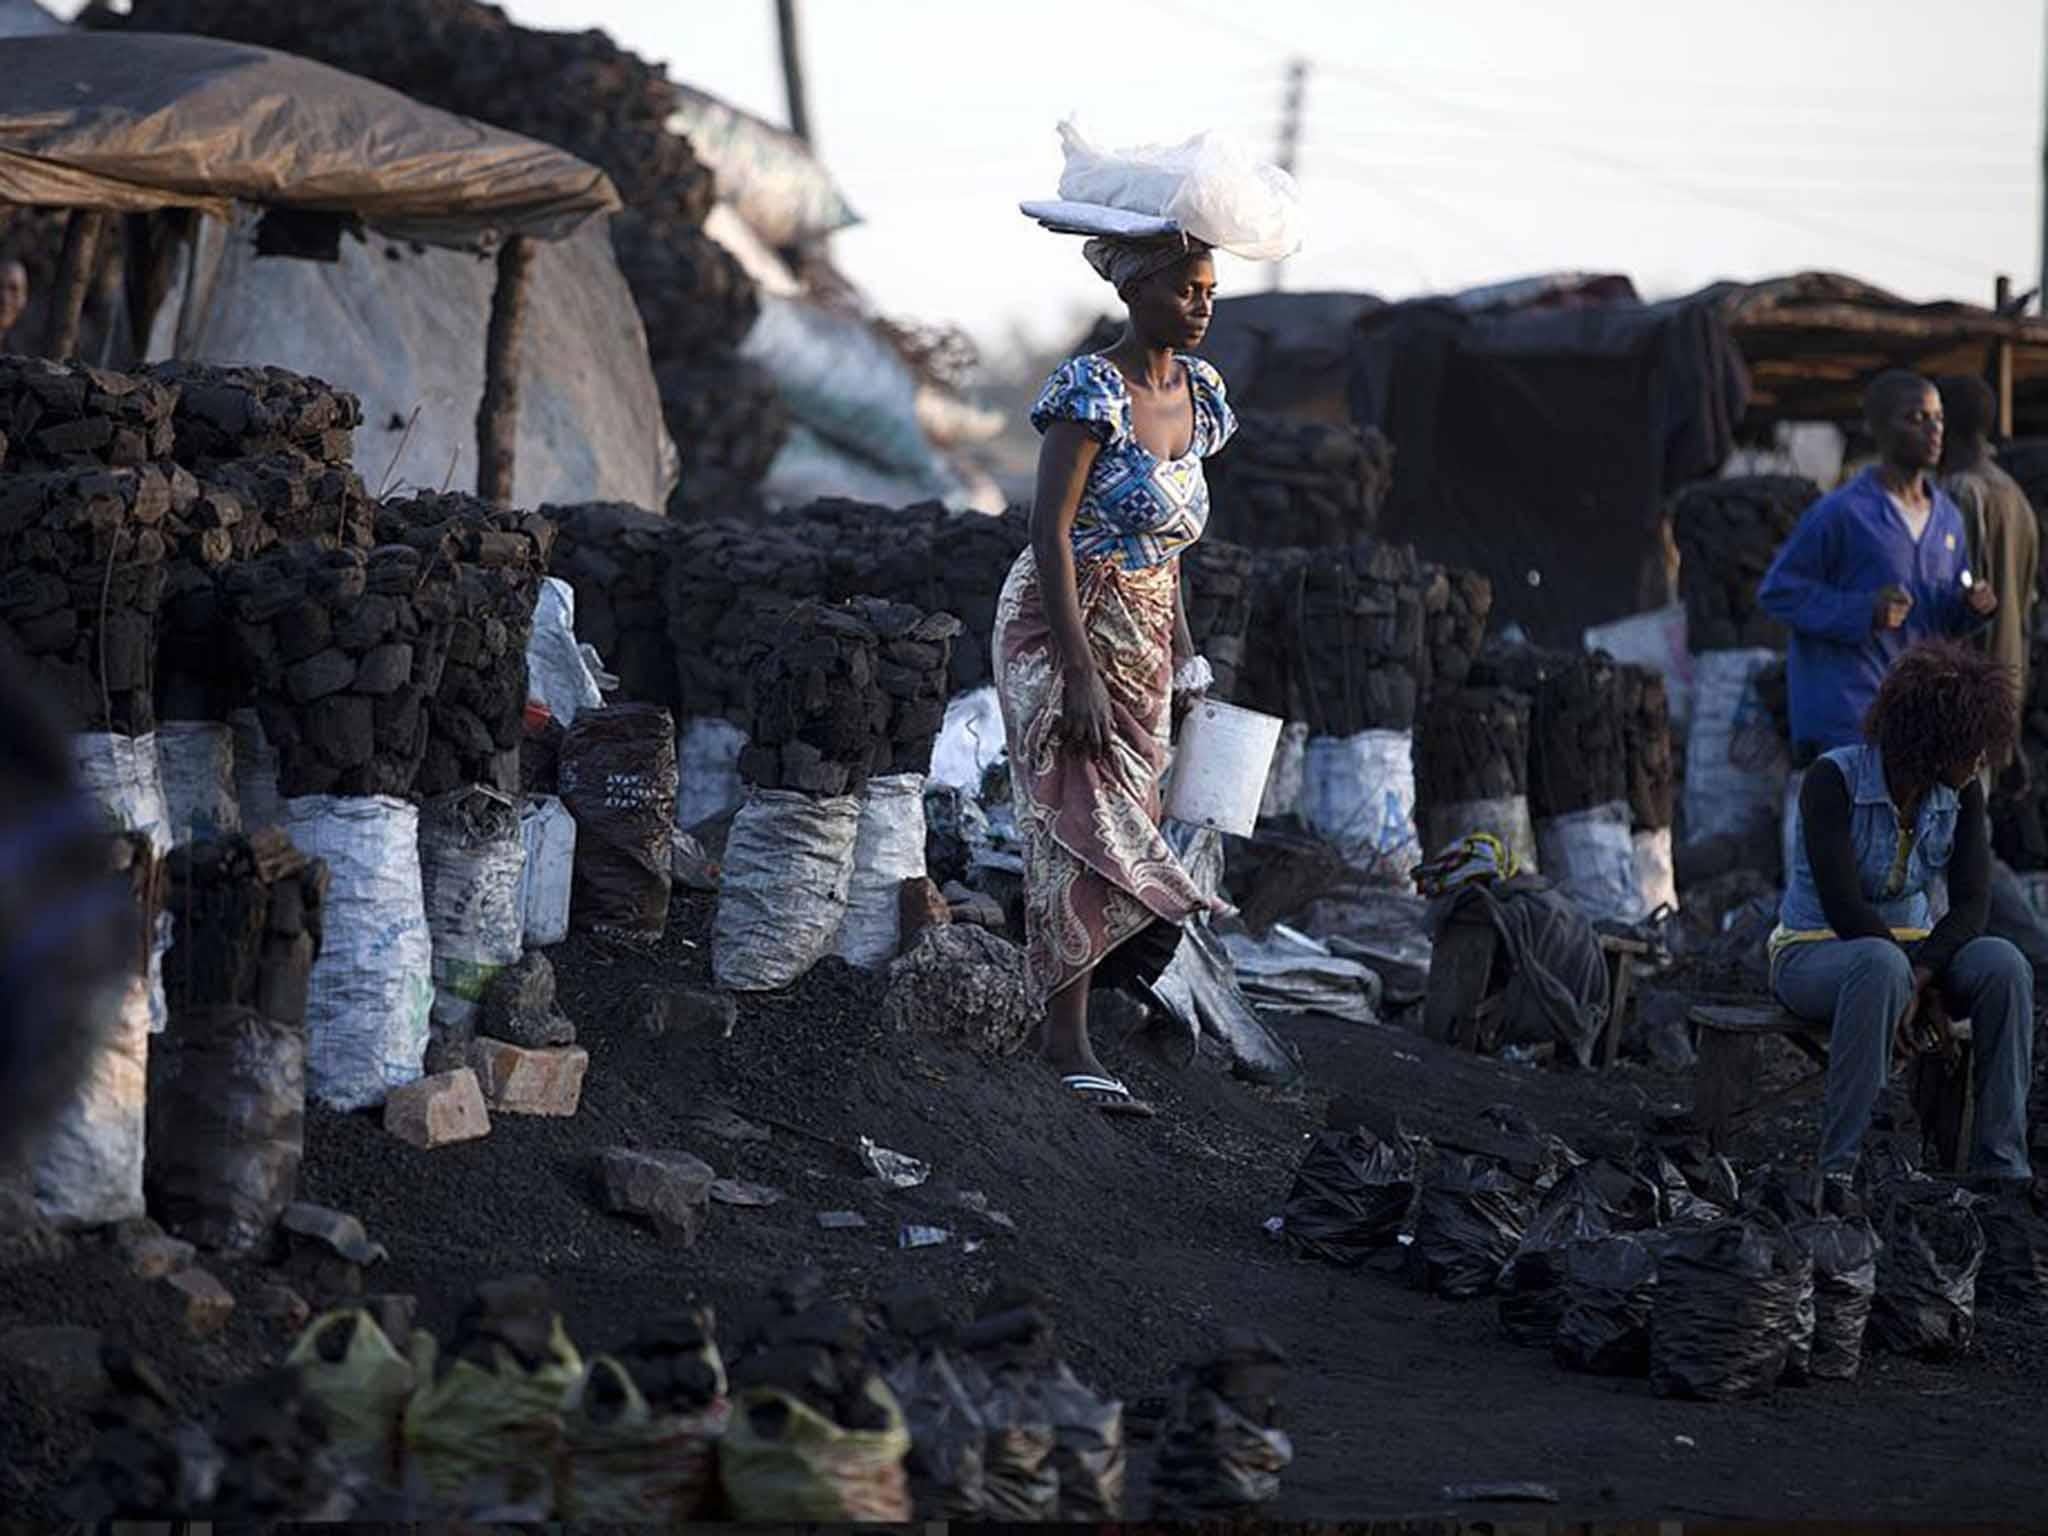 A Charcoal market just outside of Zambia's capital, Lusaka